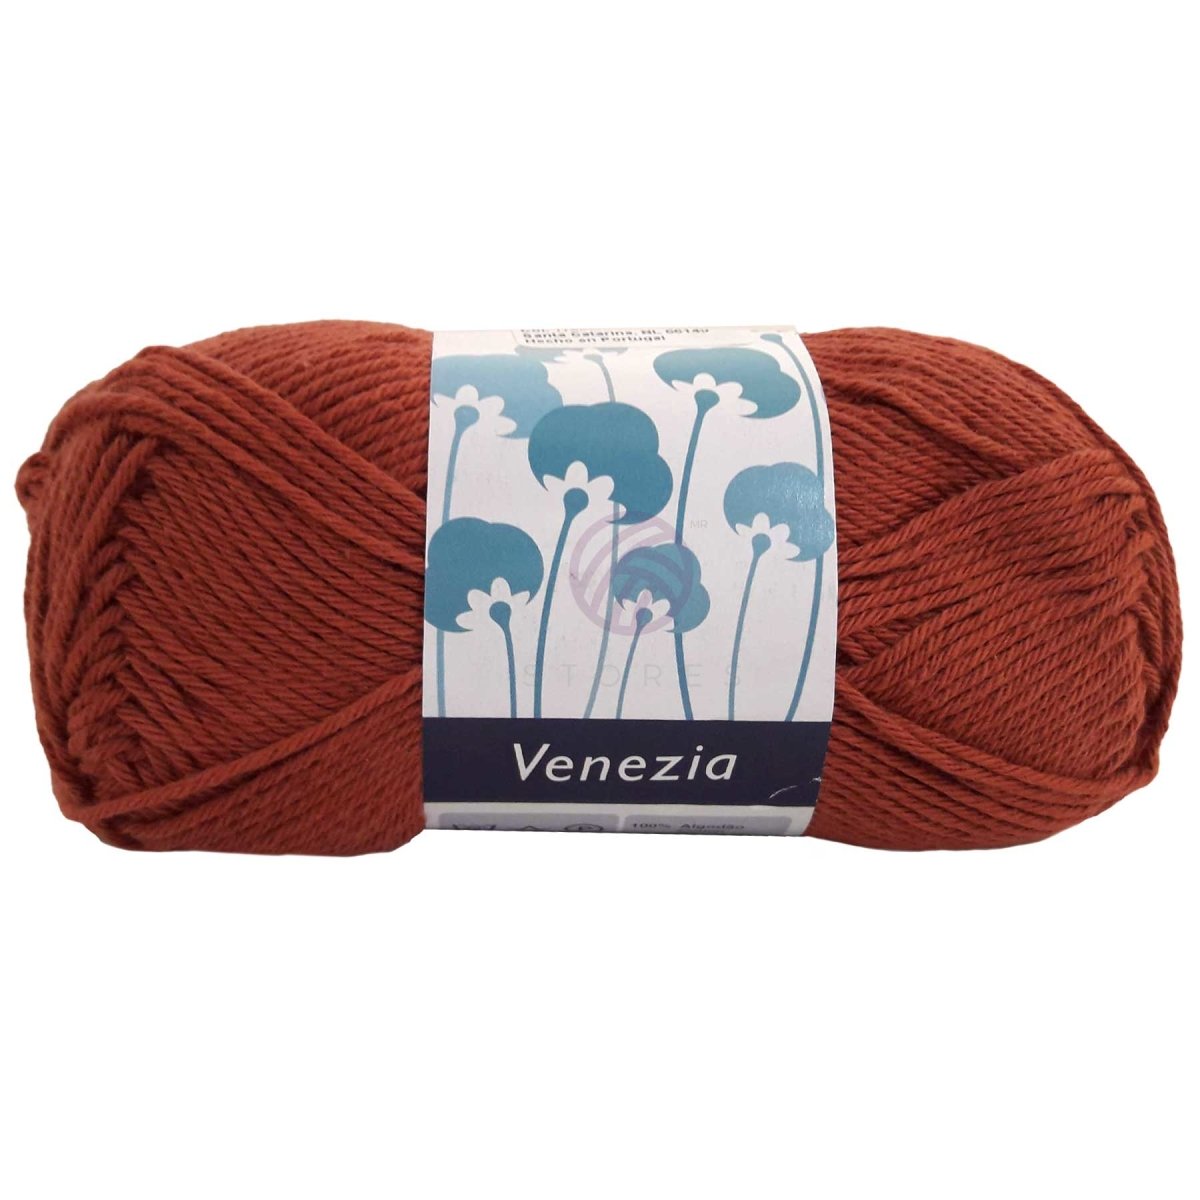 VENEZIA - Crochetstores204-215606850204213